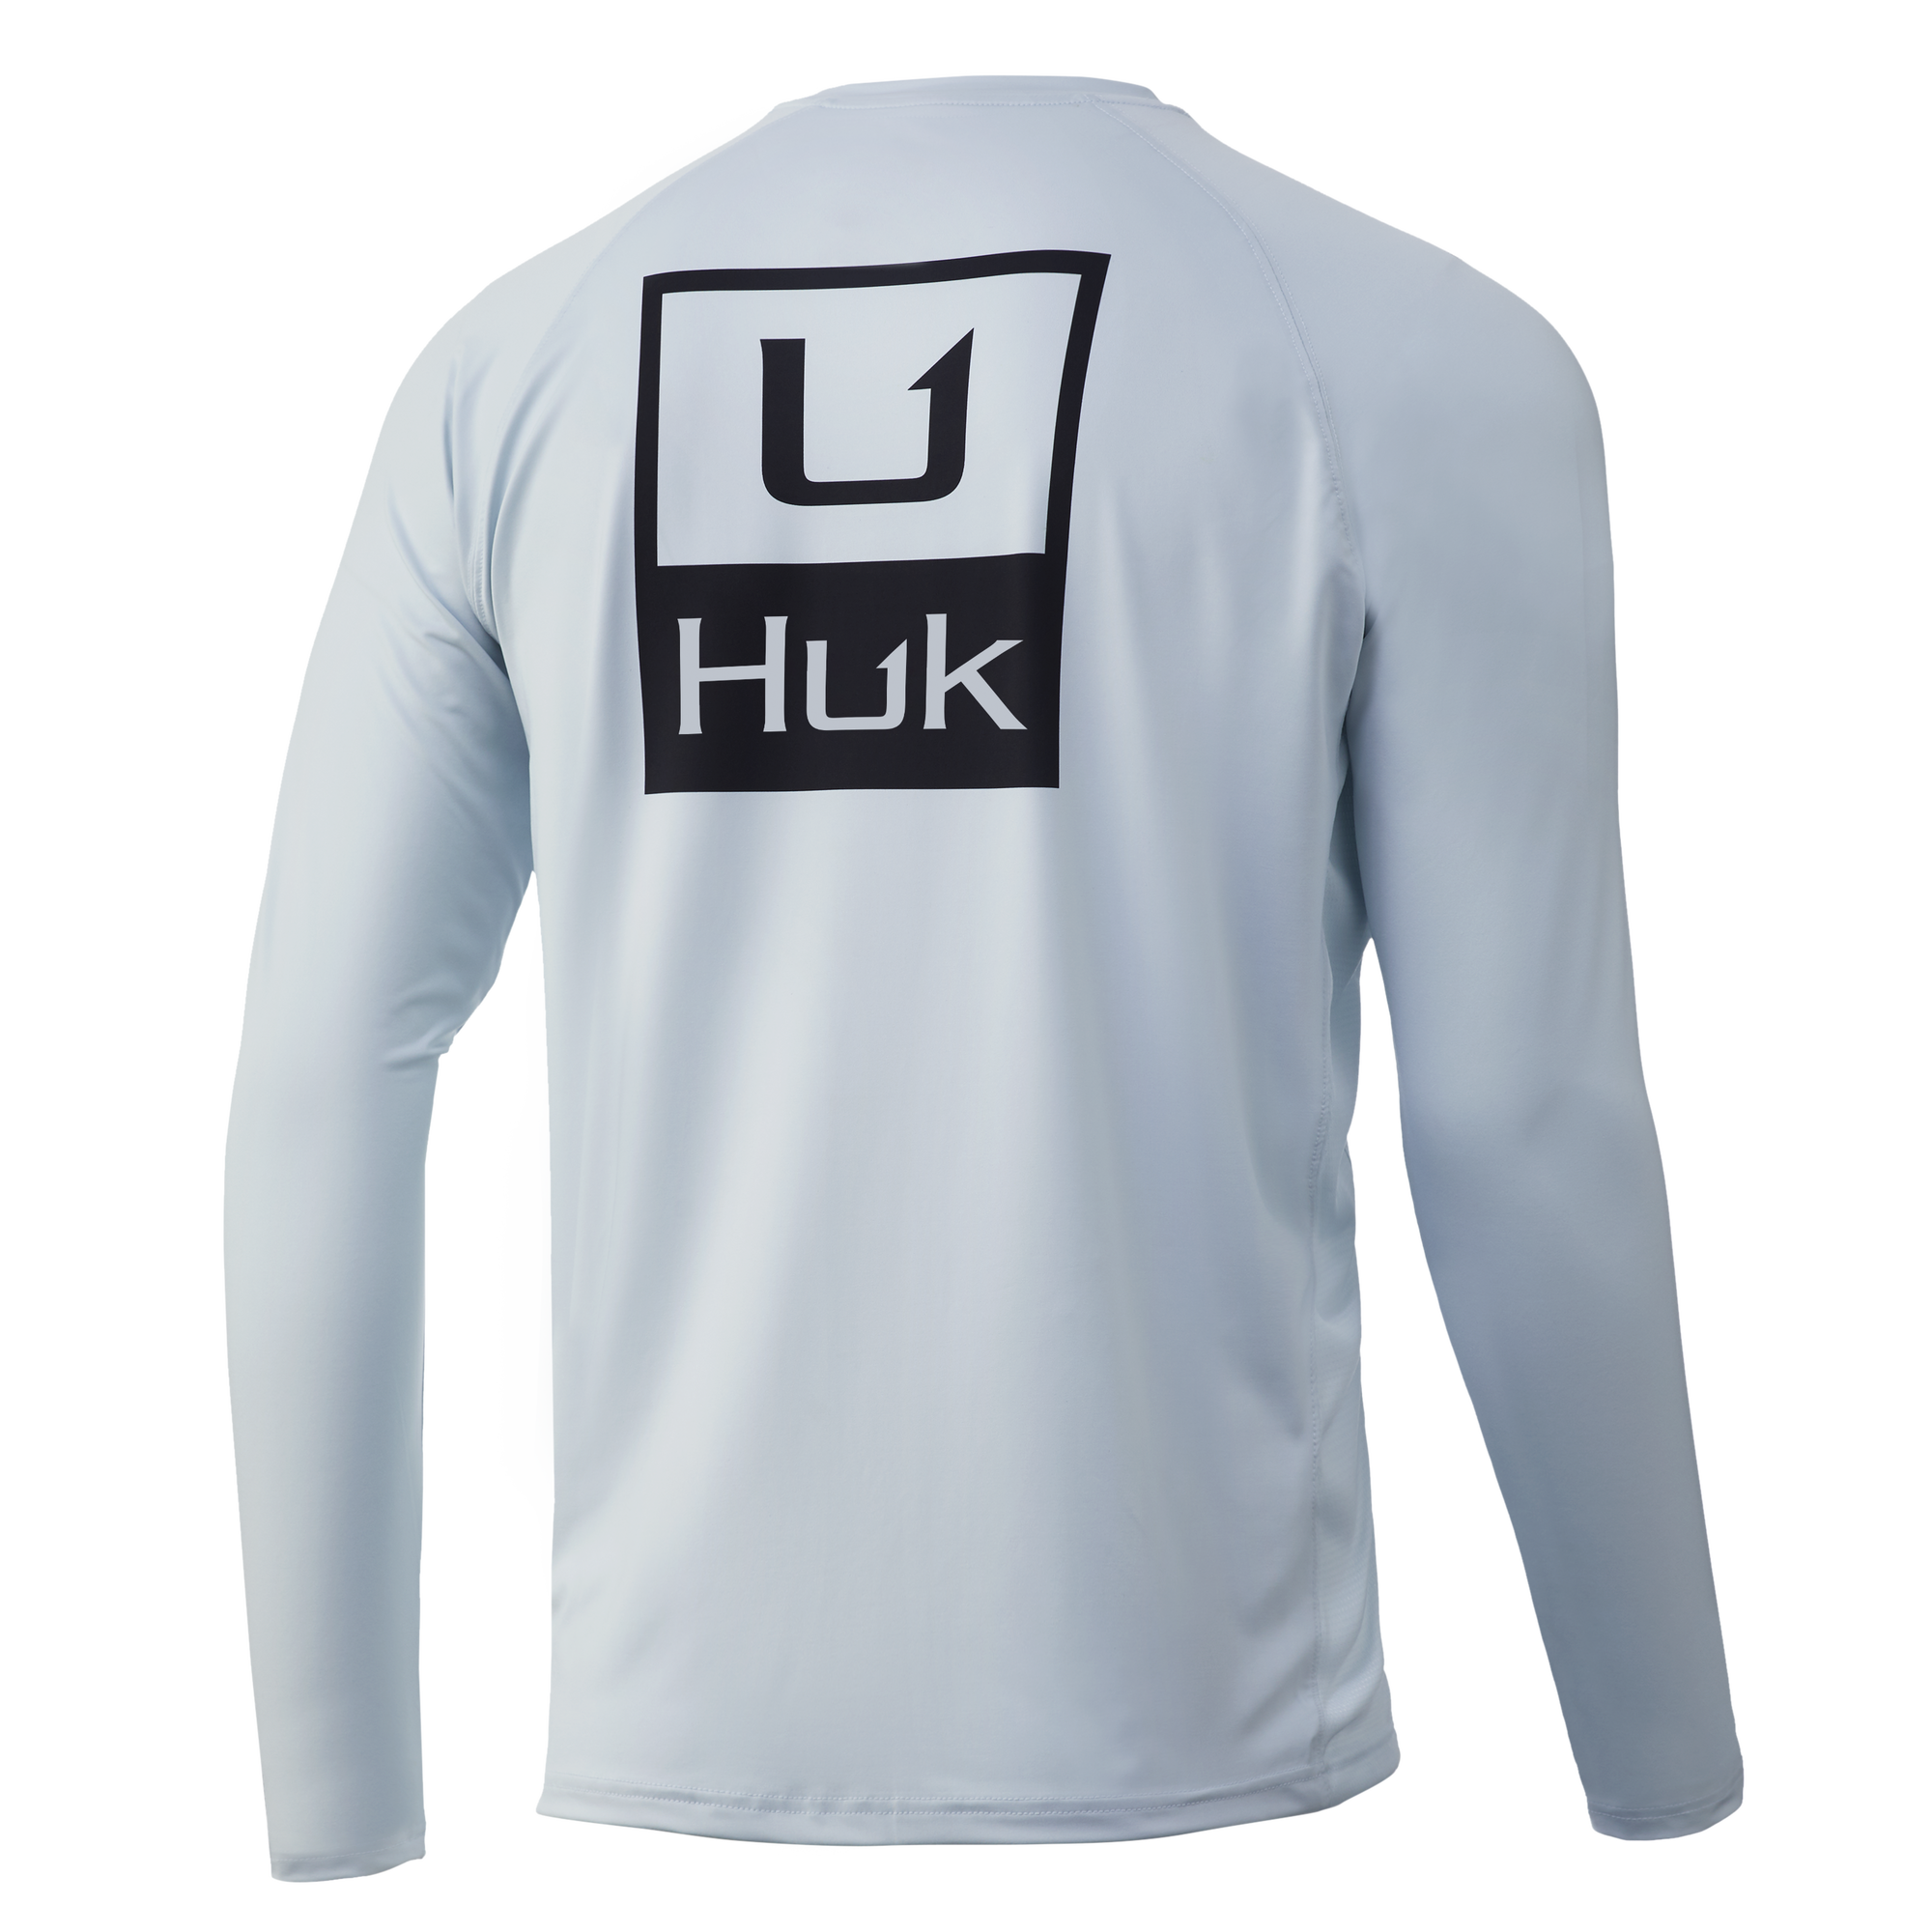 HUK Huk'd Up Pursuit - Plein Air